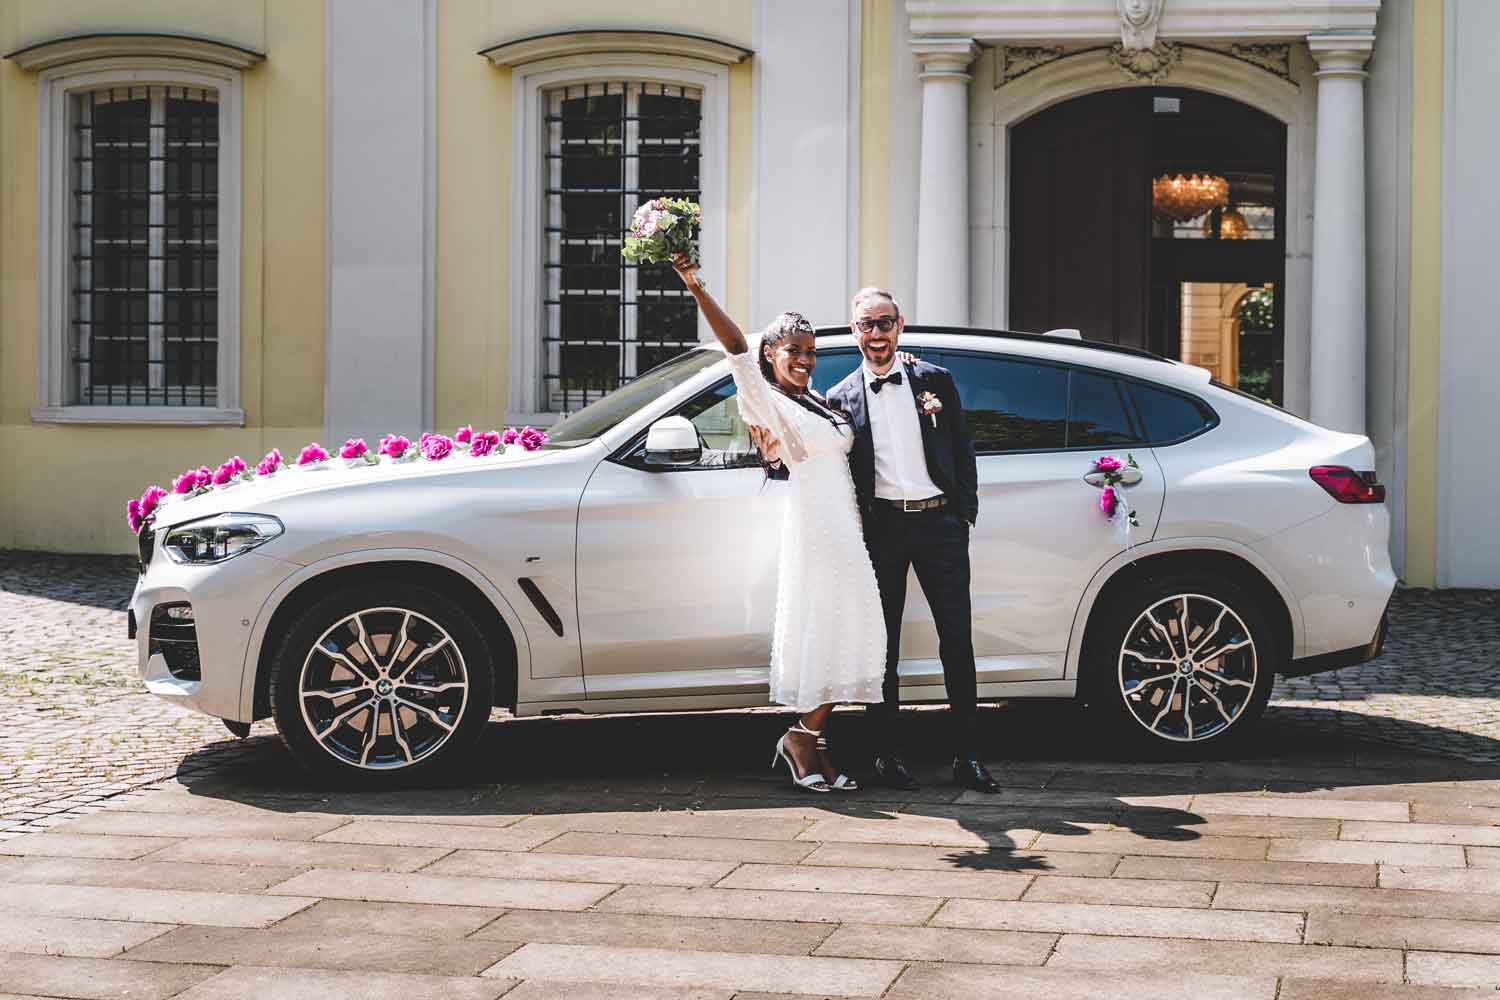 schiesshaus heilbronn hochzeit 22 - Ultra-romantische Hochzeit im Schießhaus von Heilbronn